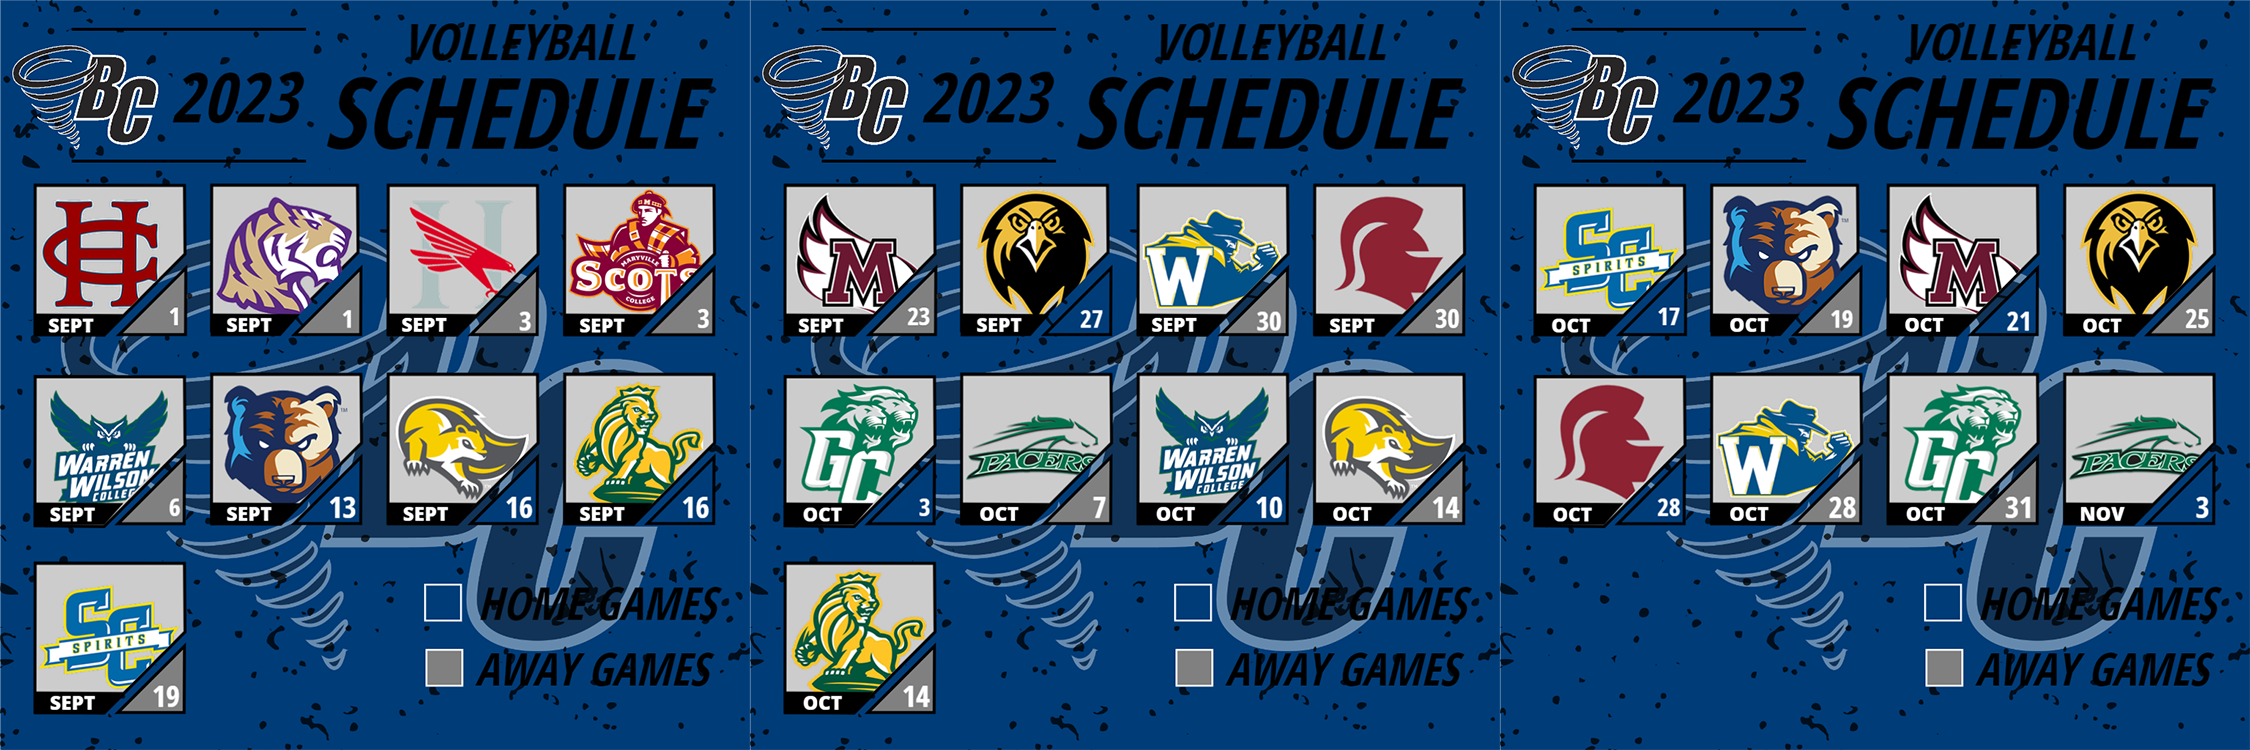 BC Volleyball Sets 2023 Schedule